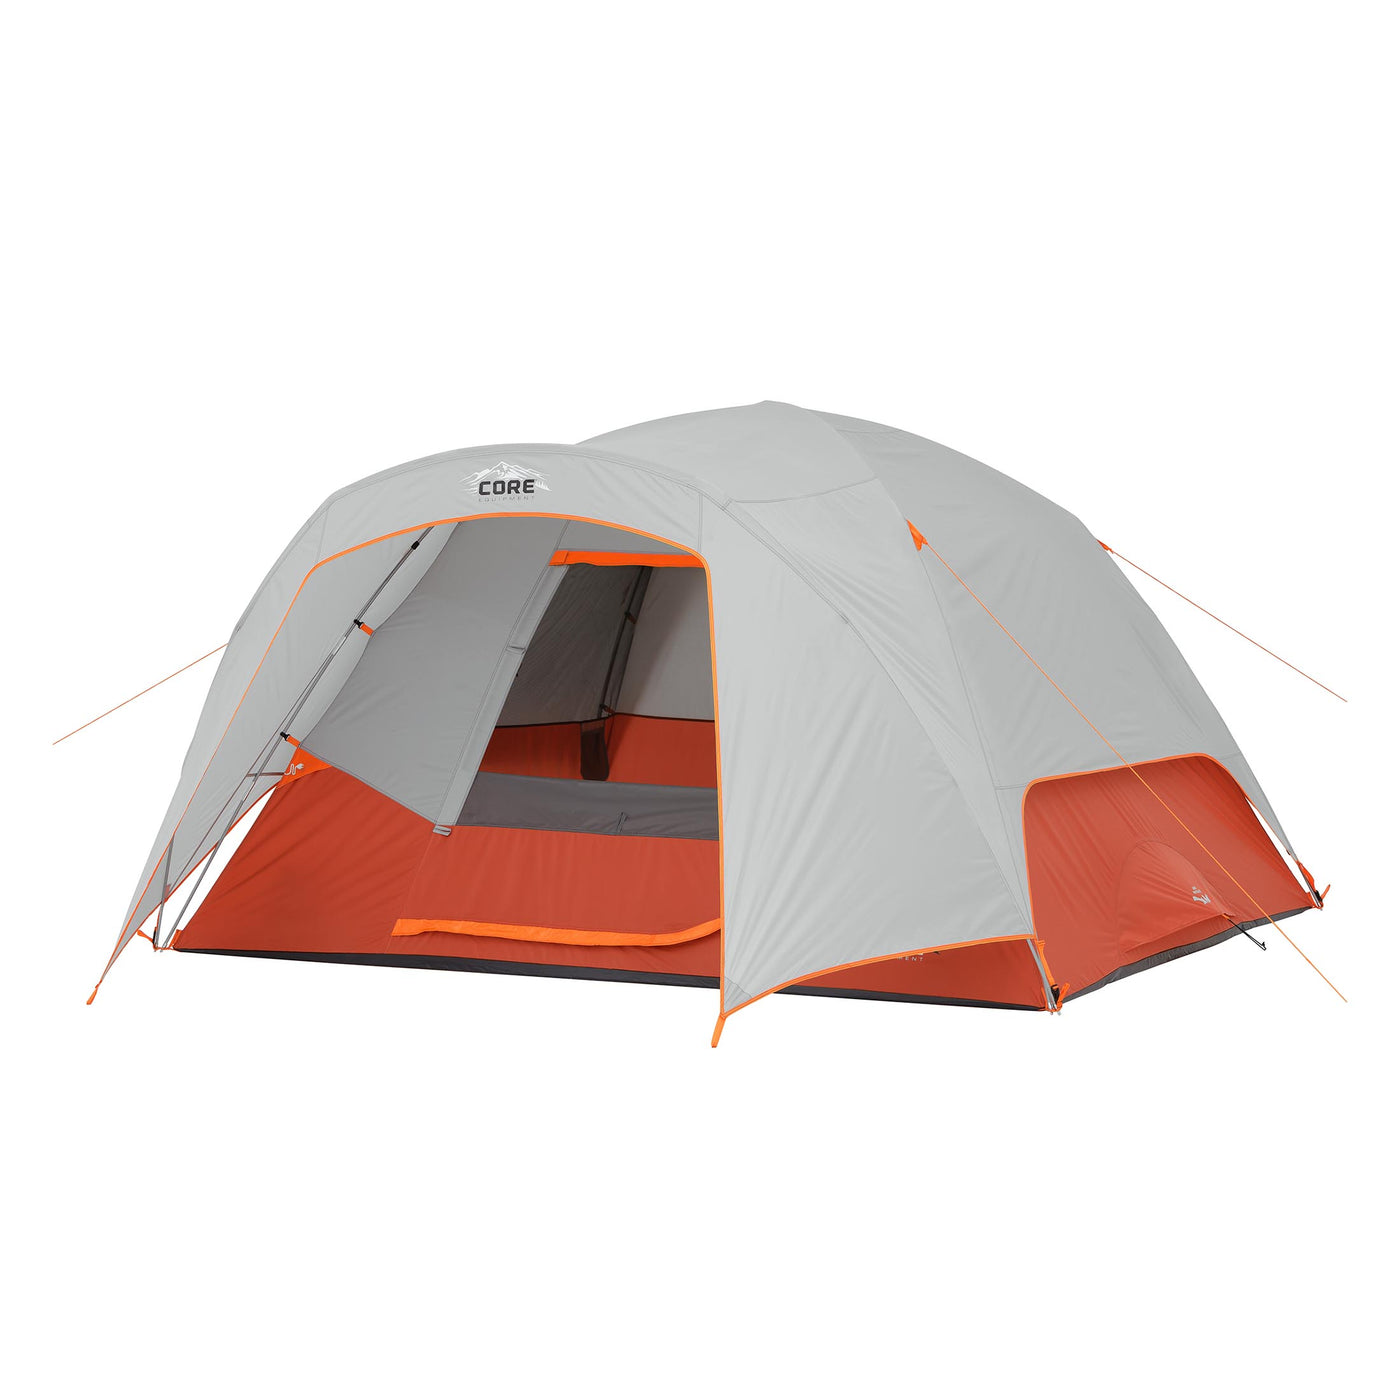 6 Person Dome Plus Tent with Vestibule 10' x 9'